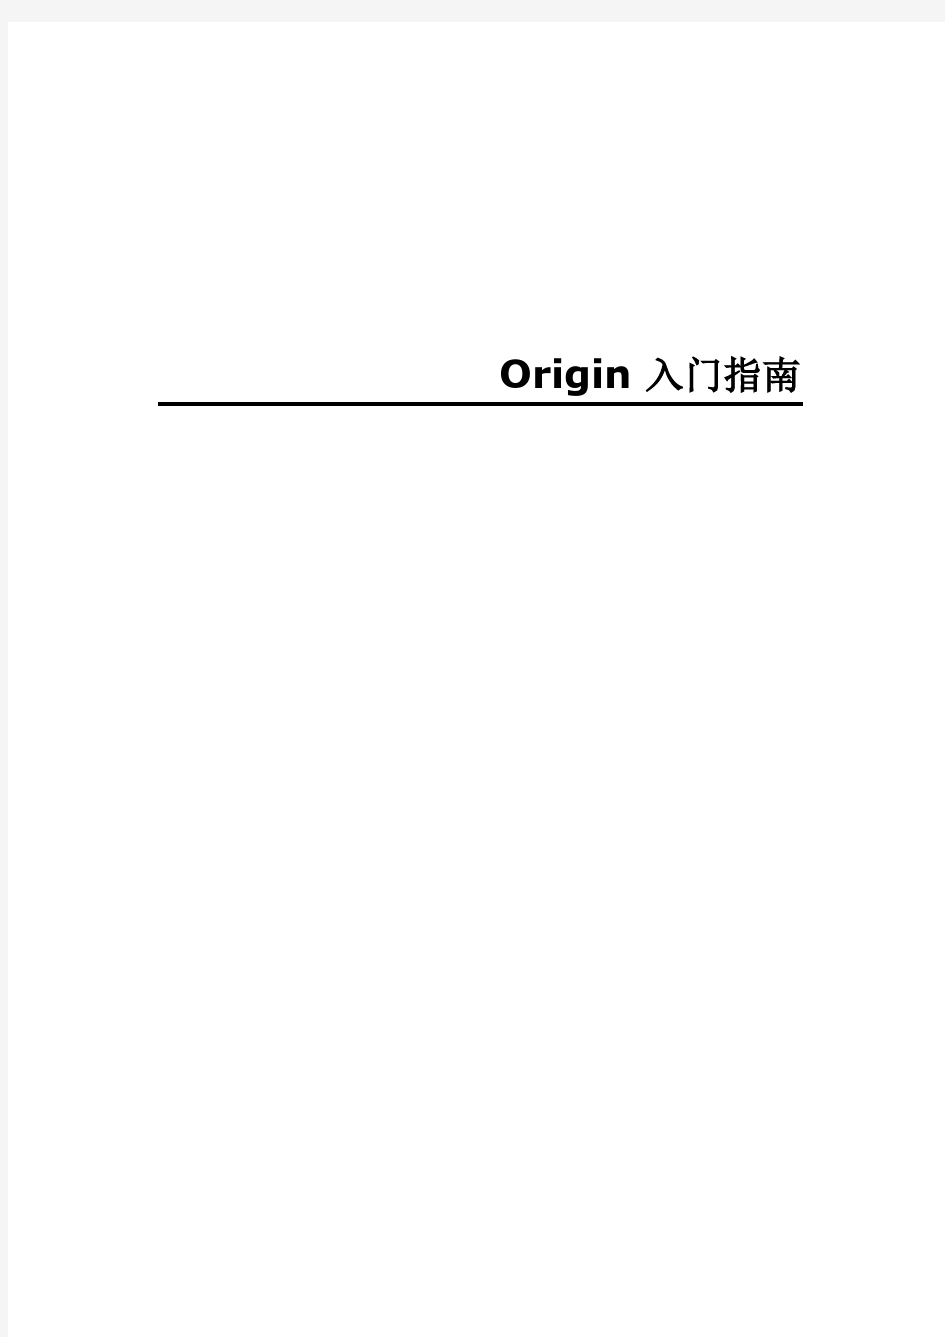 Origin入门指南(2018)